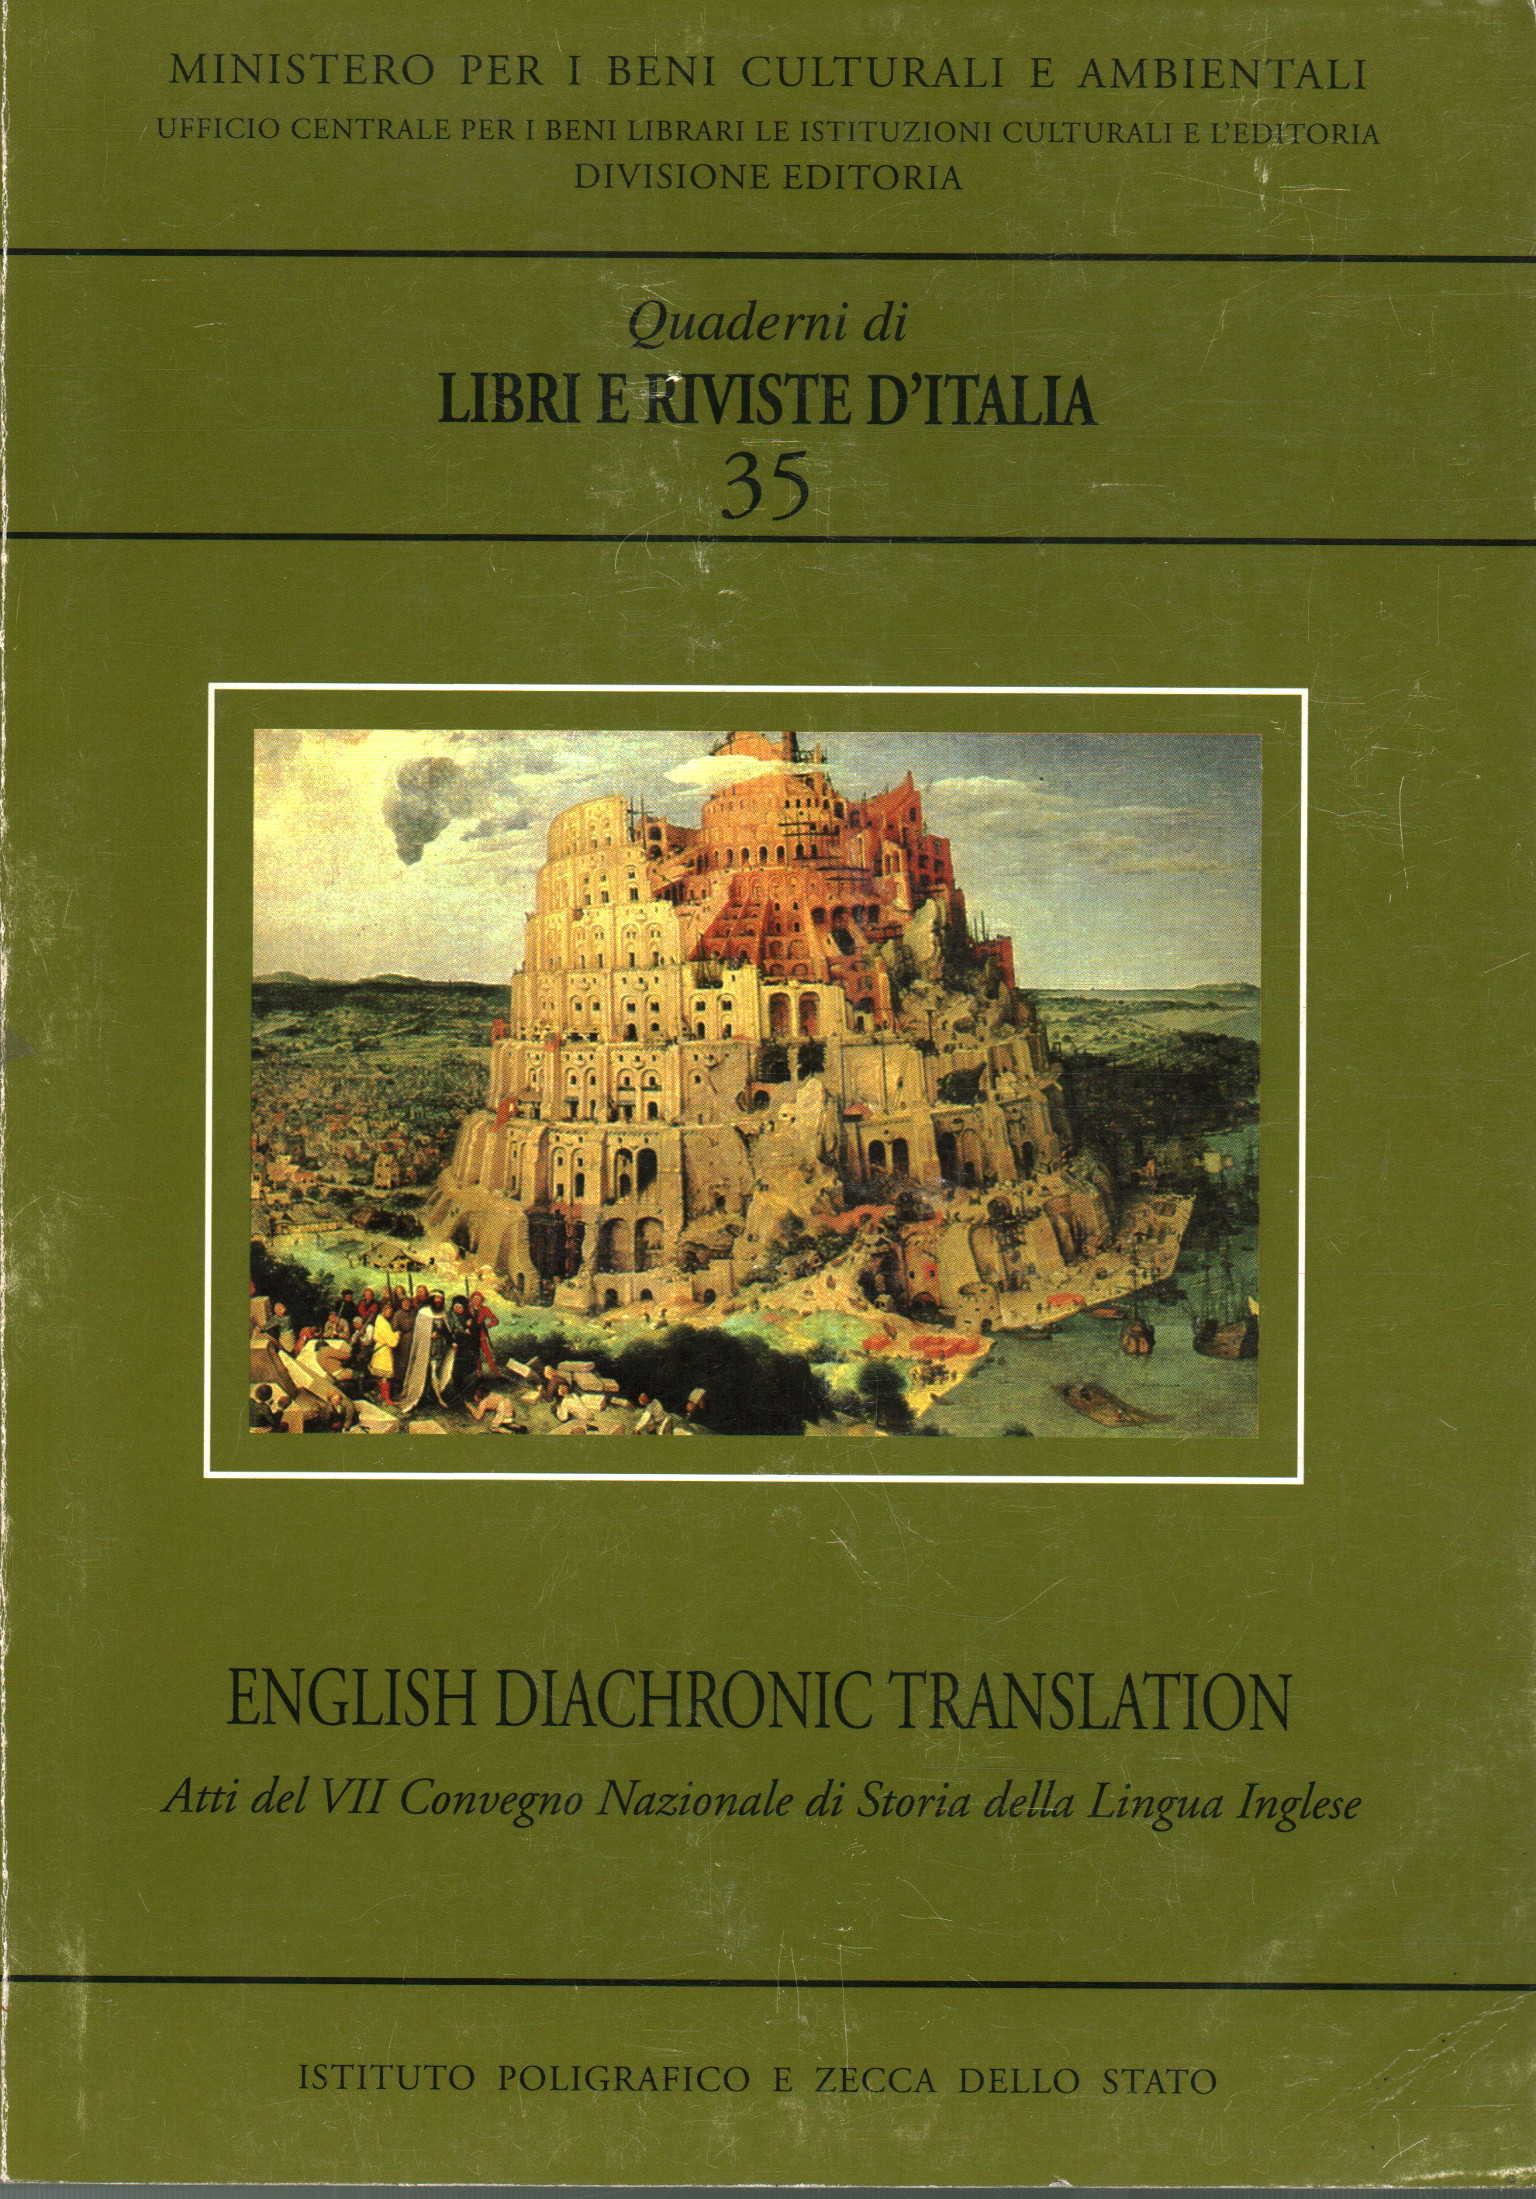 English diachronic translation, Giovanni Iamartino